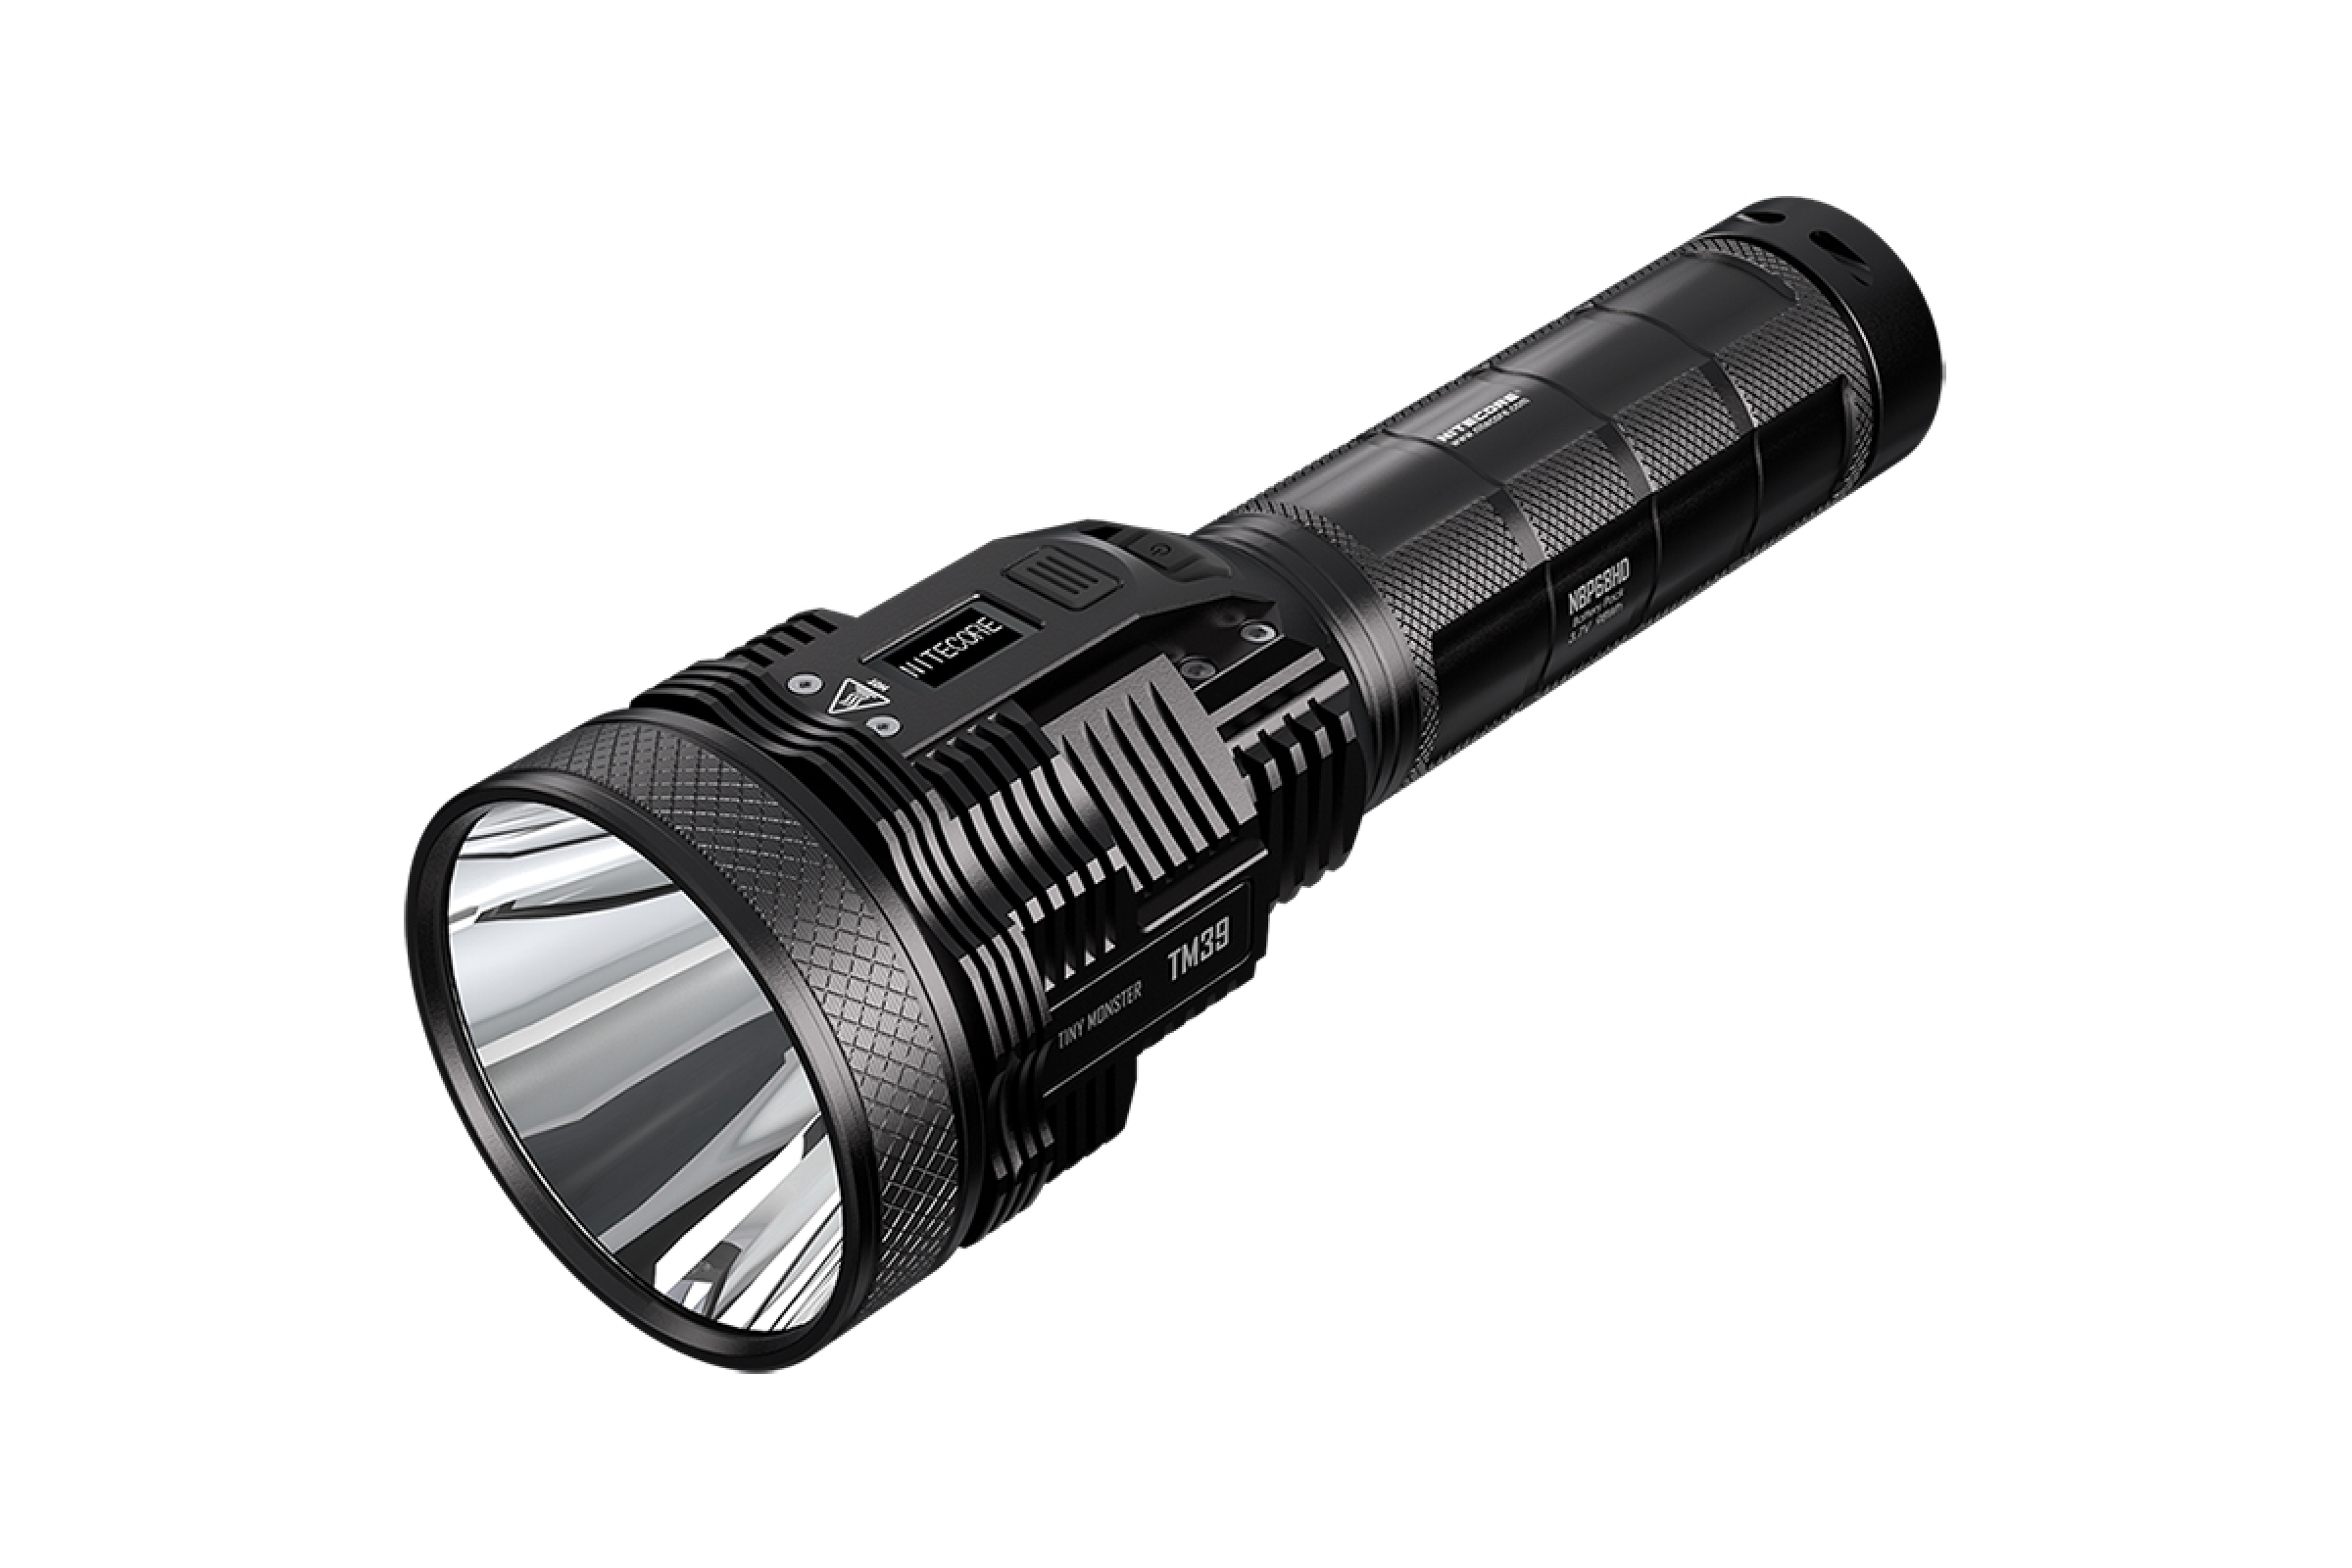 Nitecore Pro Flashlight TM39 - 5200 Lumens